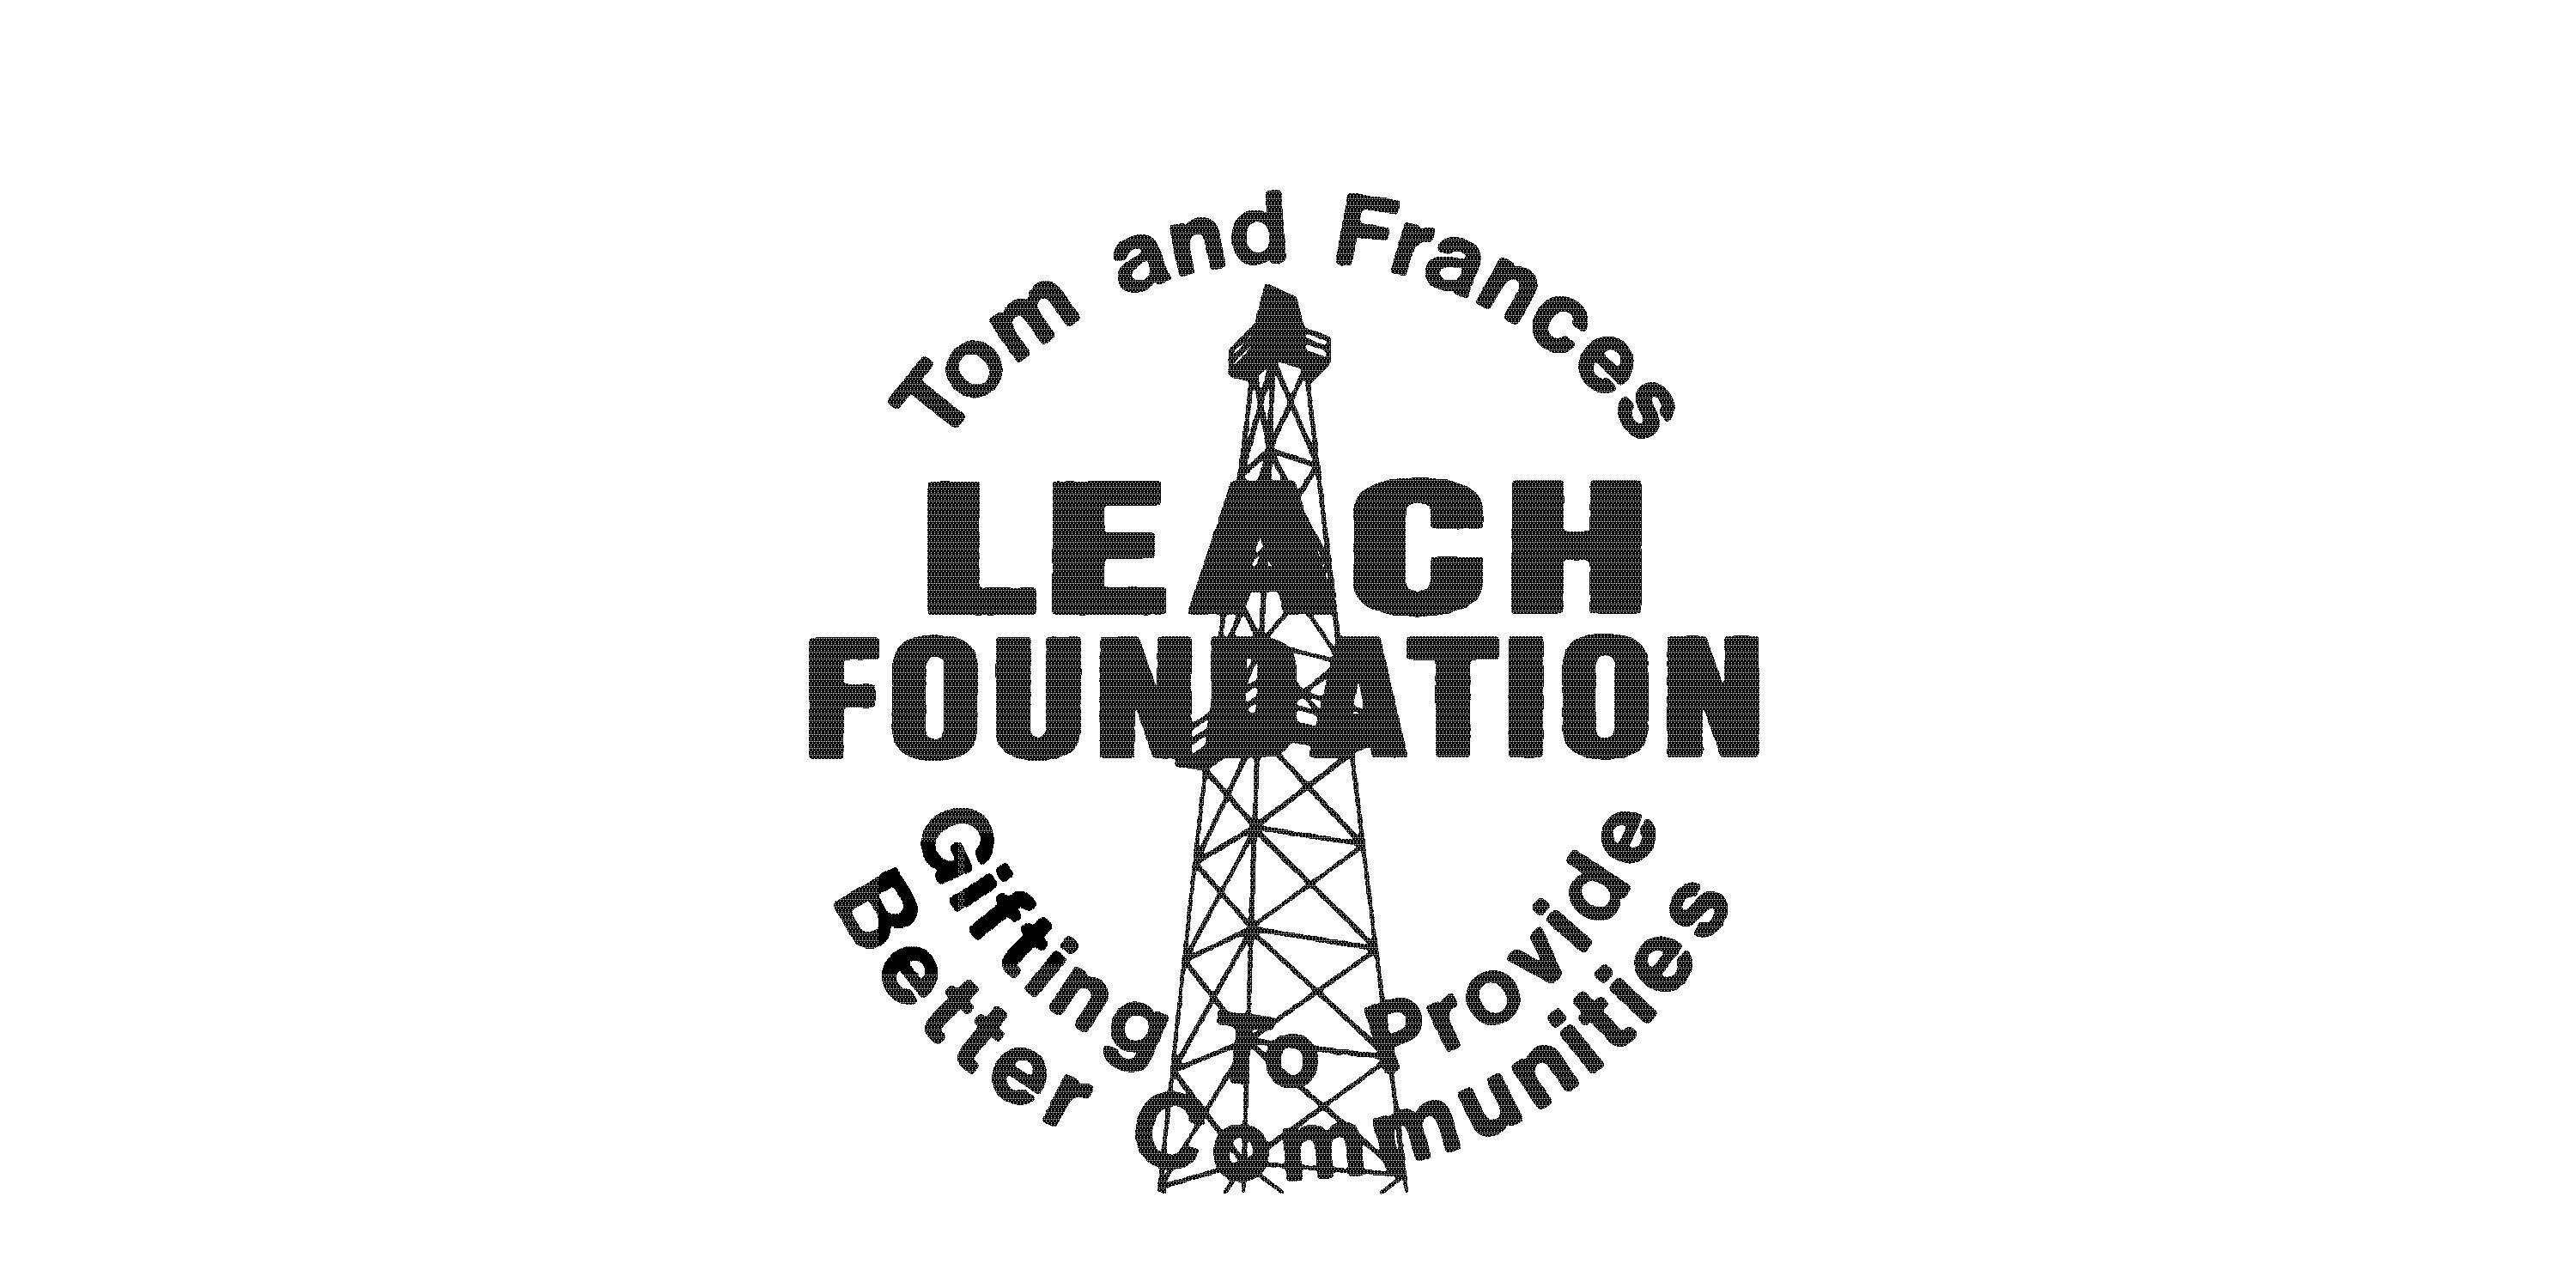 Tom and Frances Leach Foundation